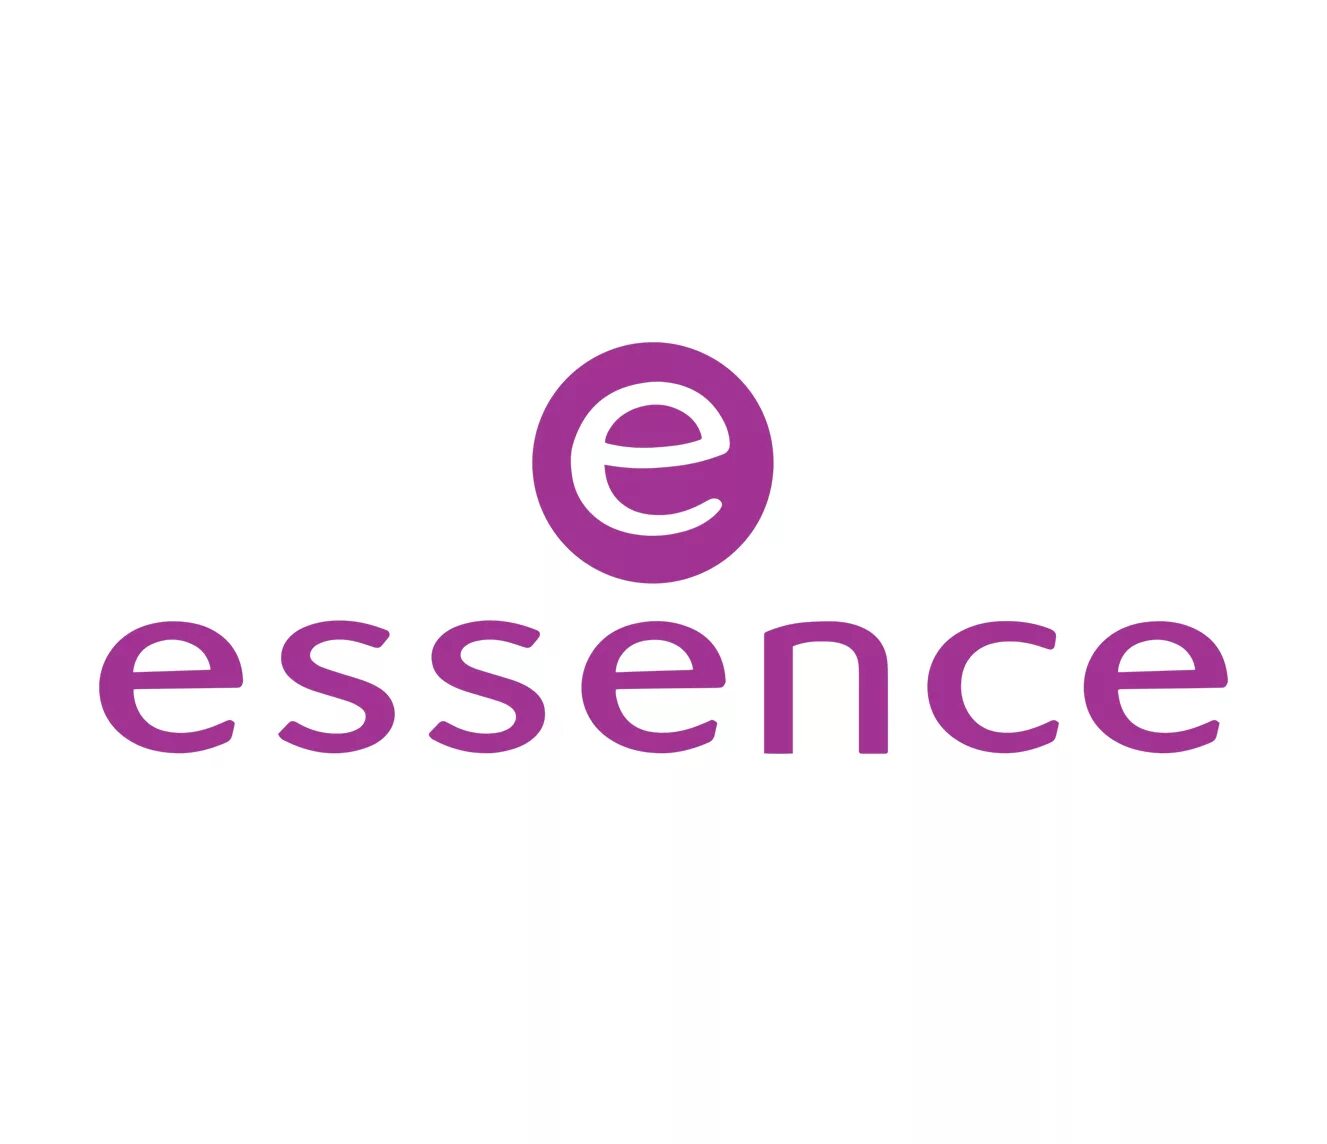 Essence. Косметика ессенсе. Essence логотип. Логотип косметики.